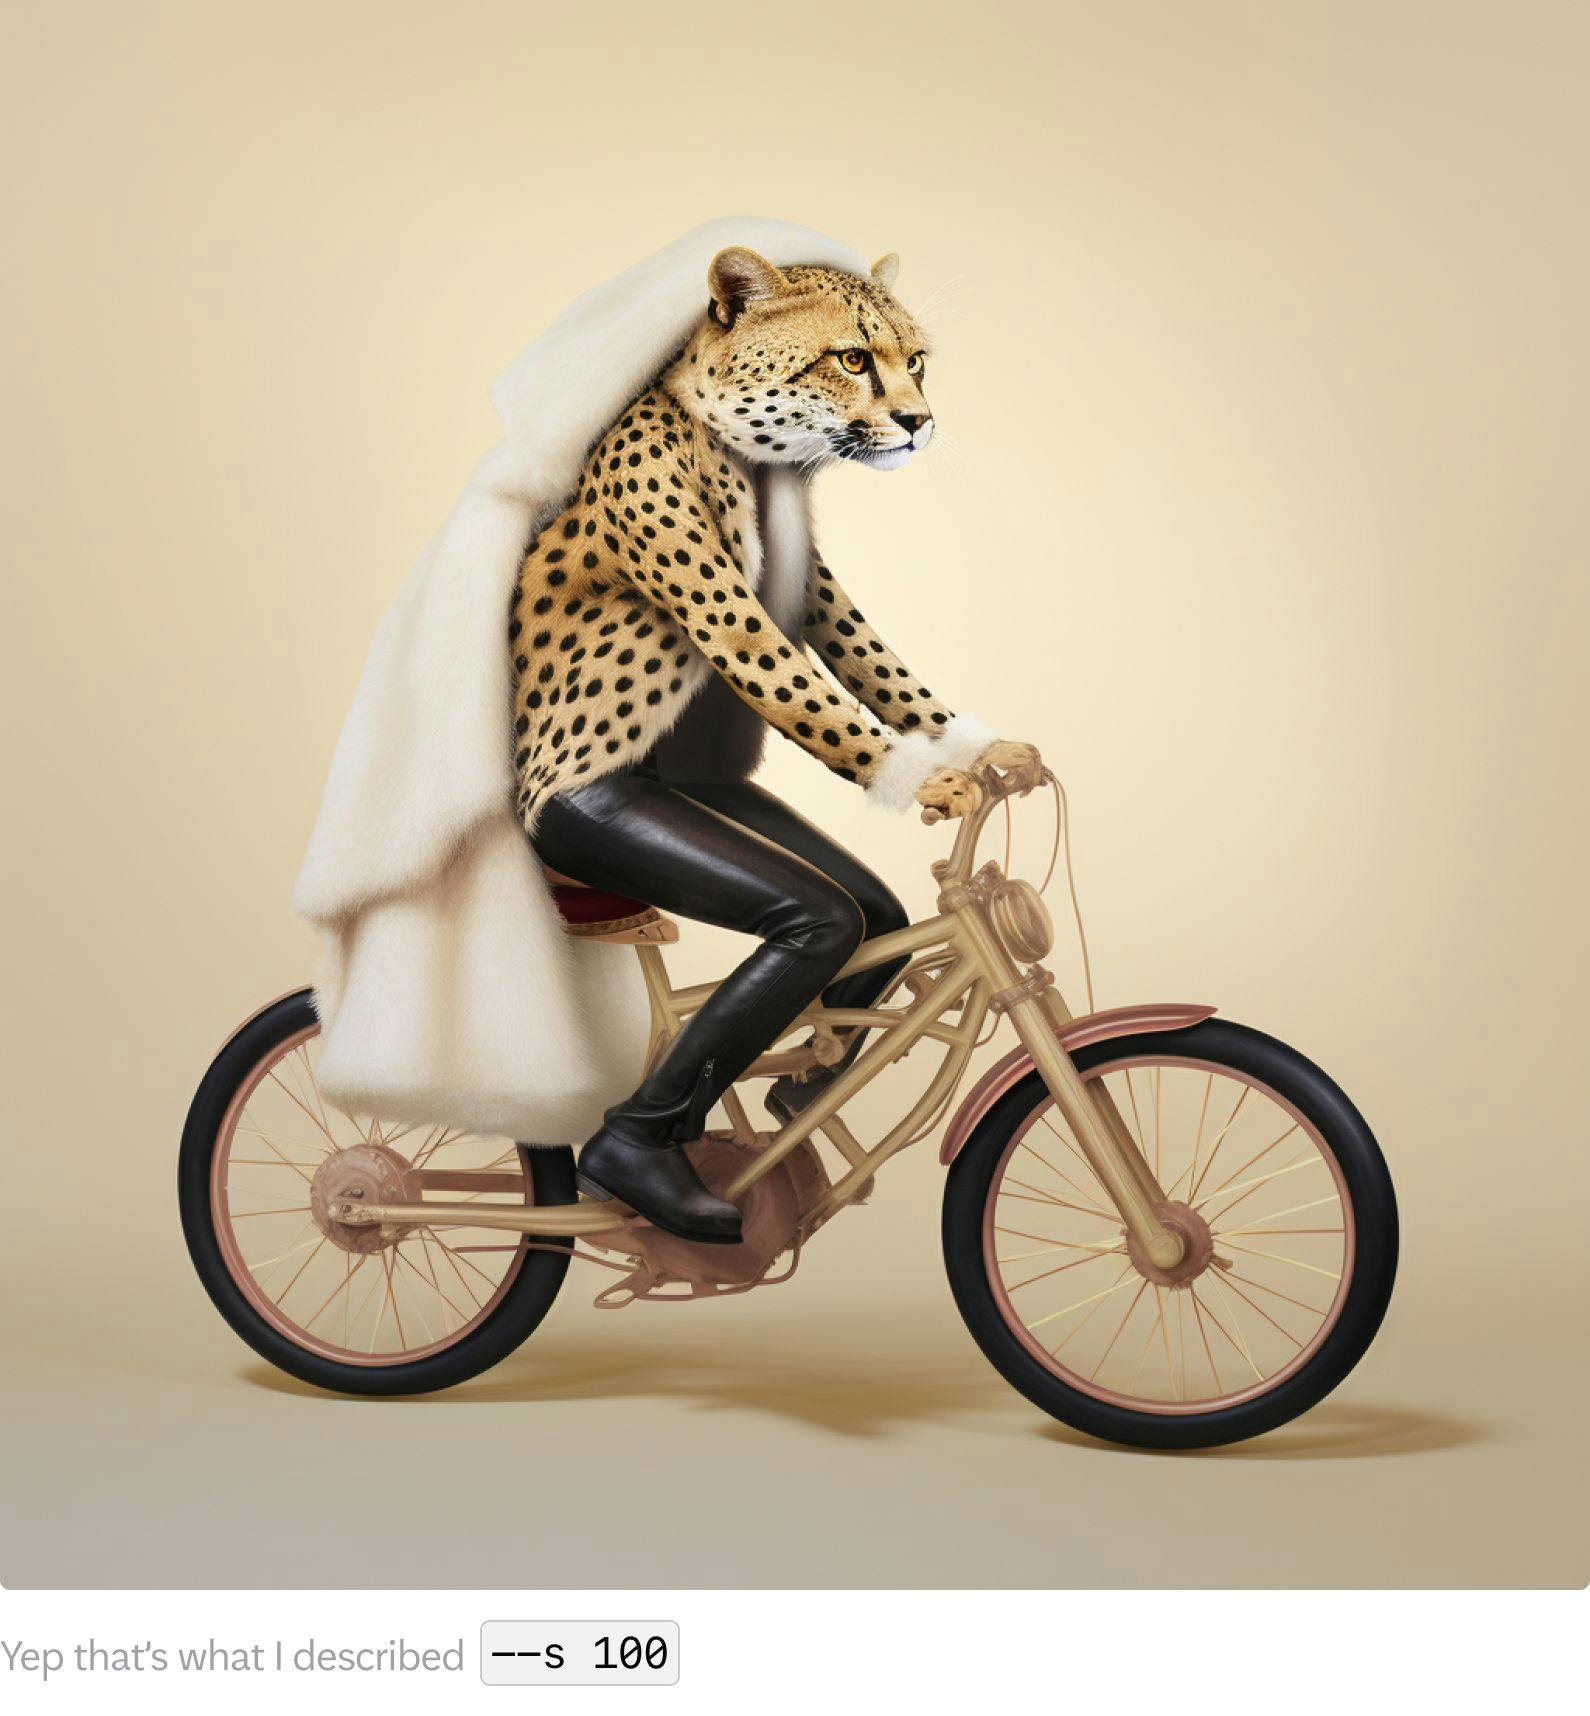 A cheetah in fashionable clothes riding a racing bike